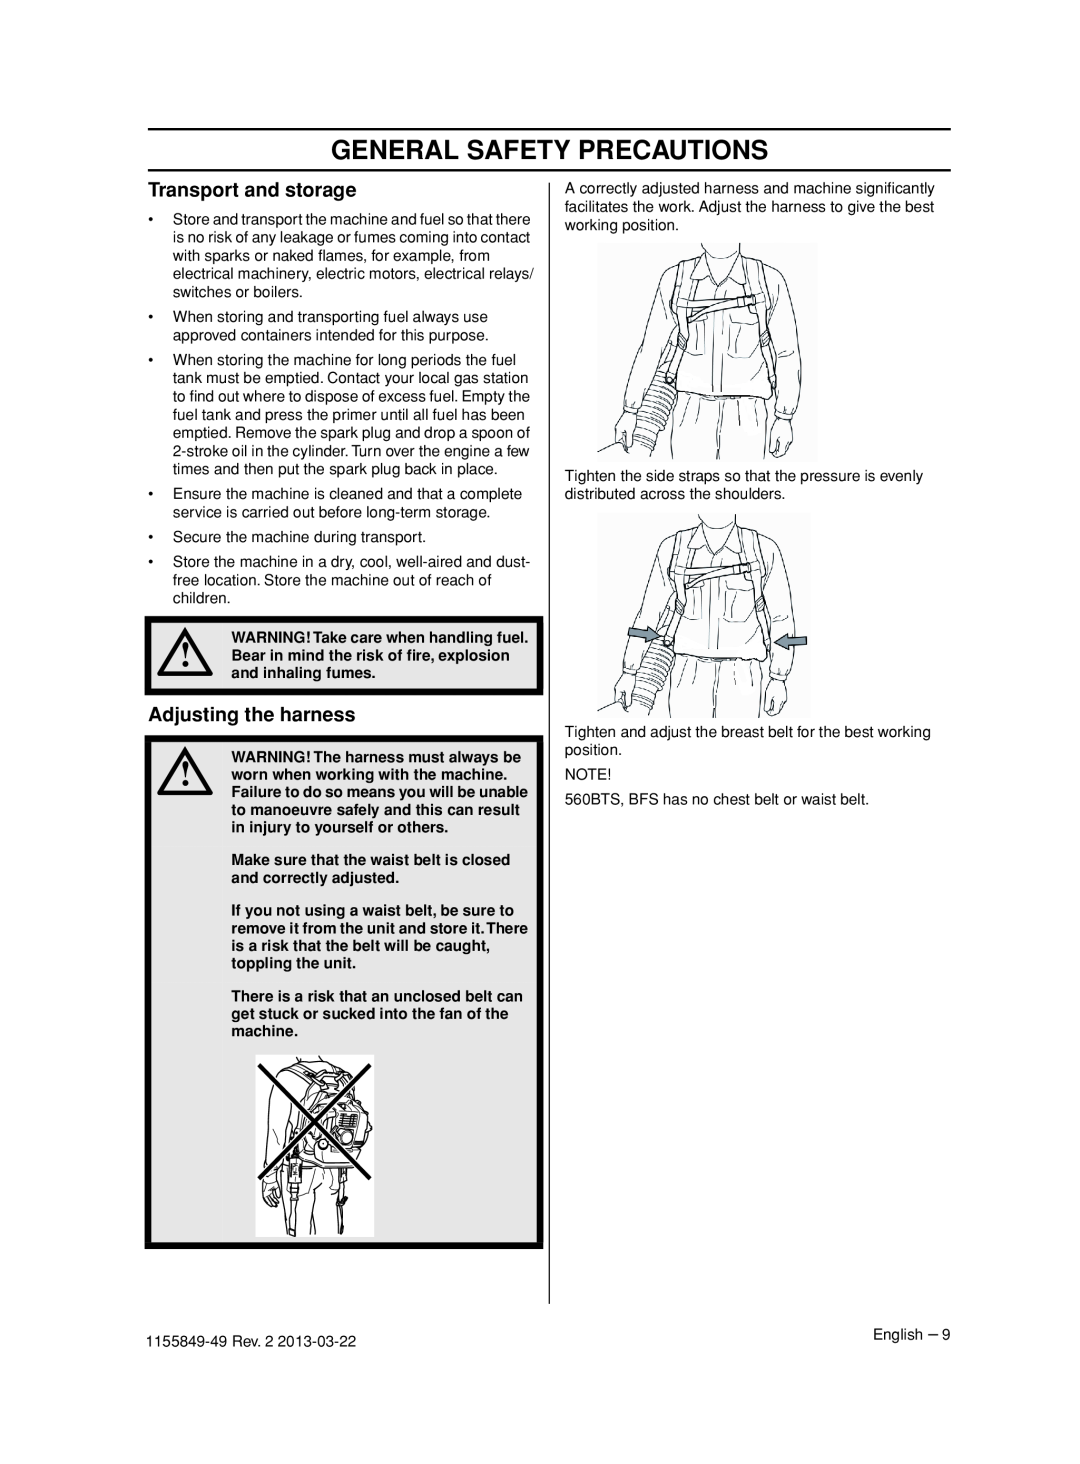 Husqvarna 966629701, 966631102, 966629602 Transport and storage, Adjusting the harness, General Safety Precautions 